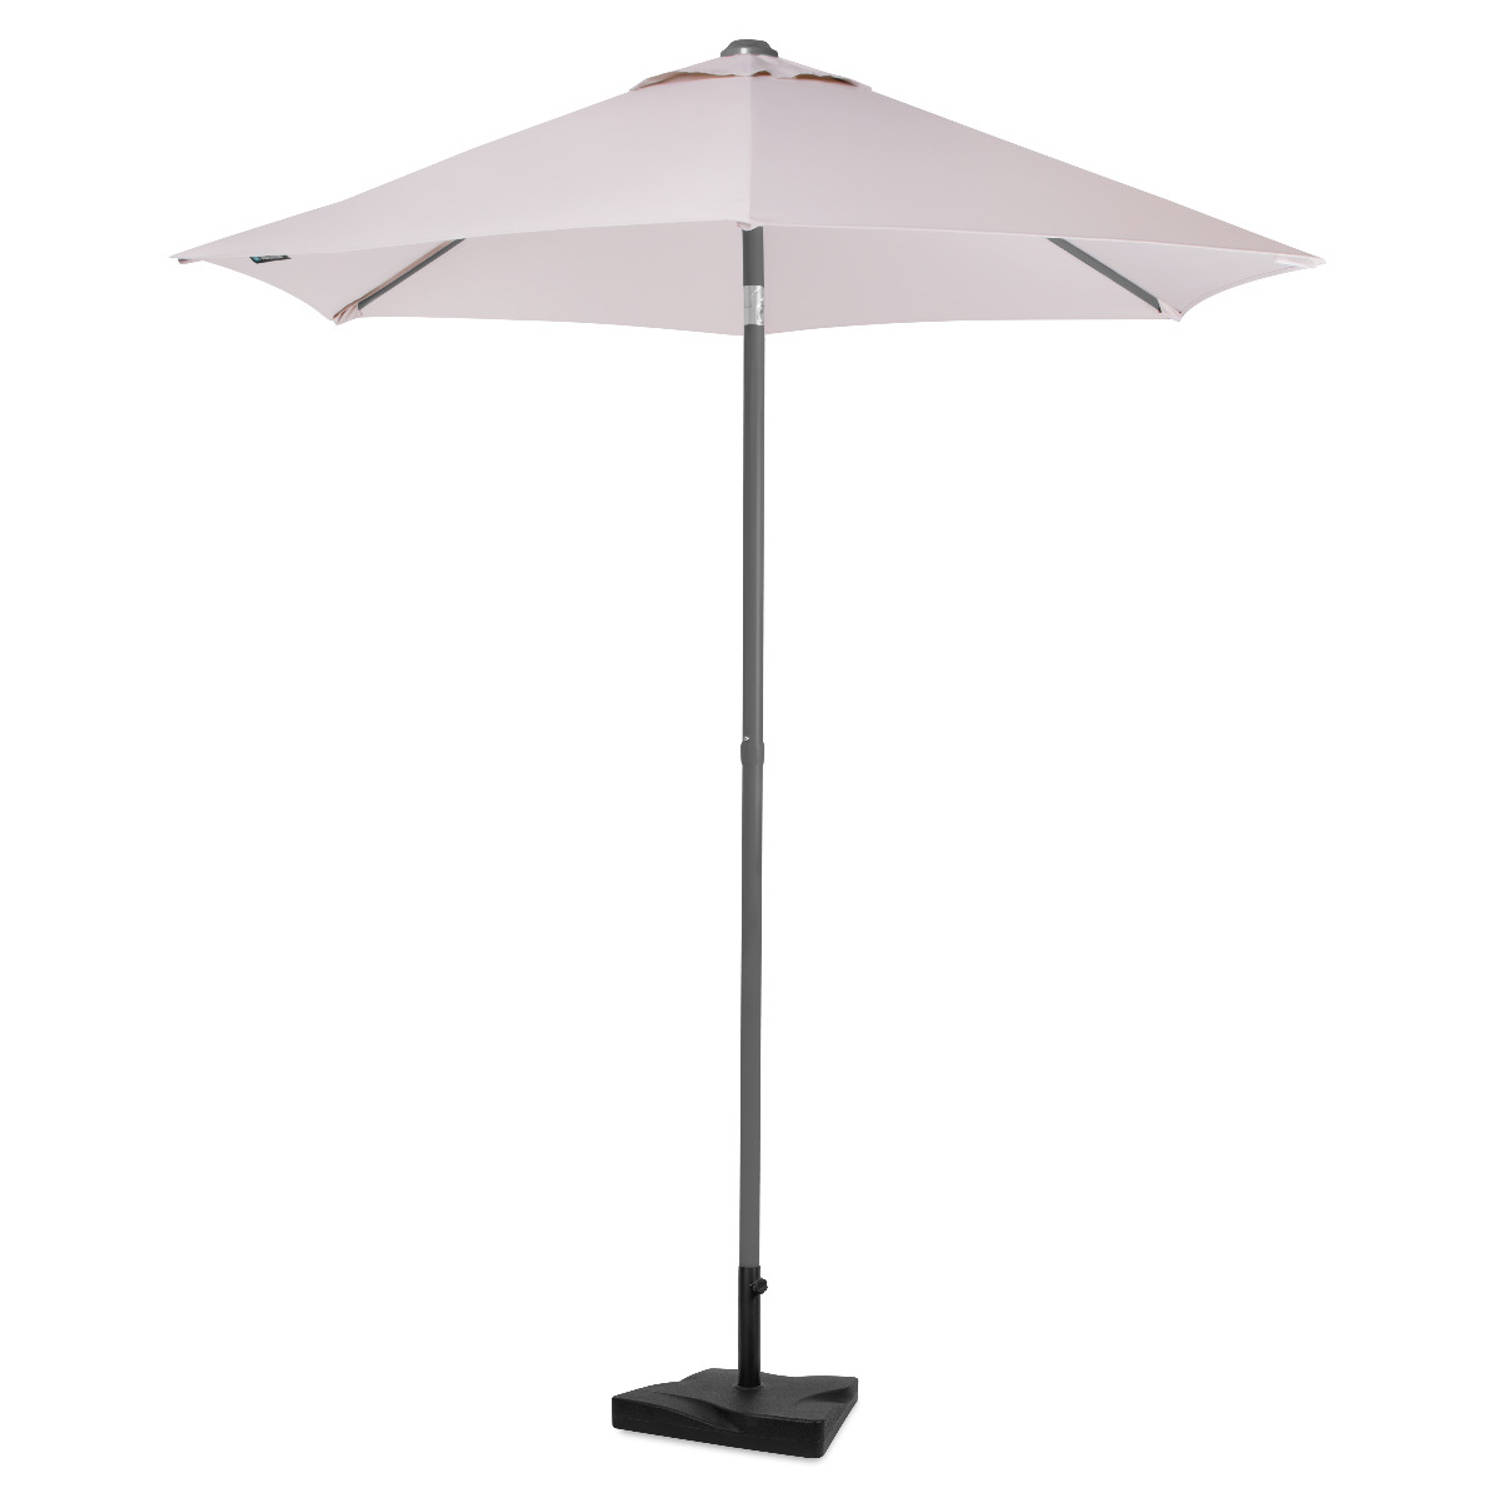 VONROC Premium Parasol Torbole – Ø200cm - Duurzame stokparasol – combi set incl. parasolvoet van 20 kg - UV werend doek - Beige – Incl. beschermhoes